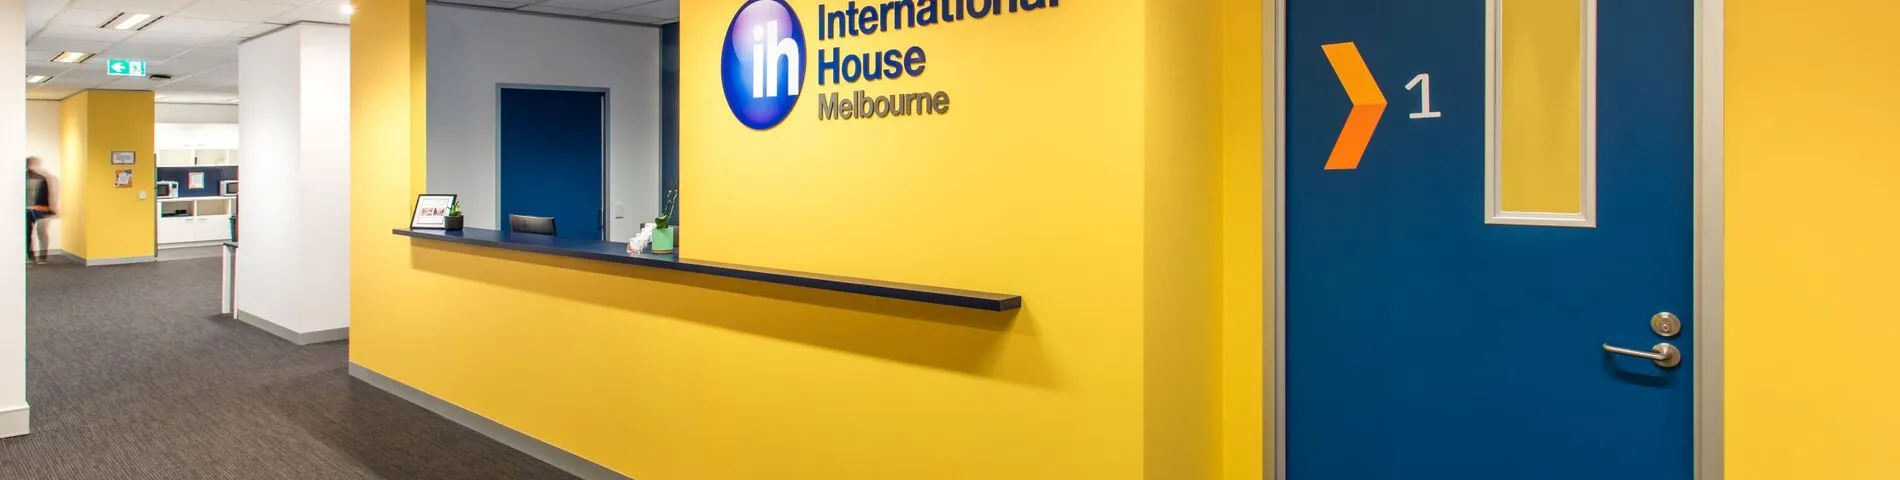 International House resim 1